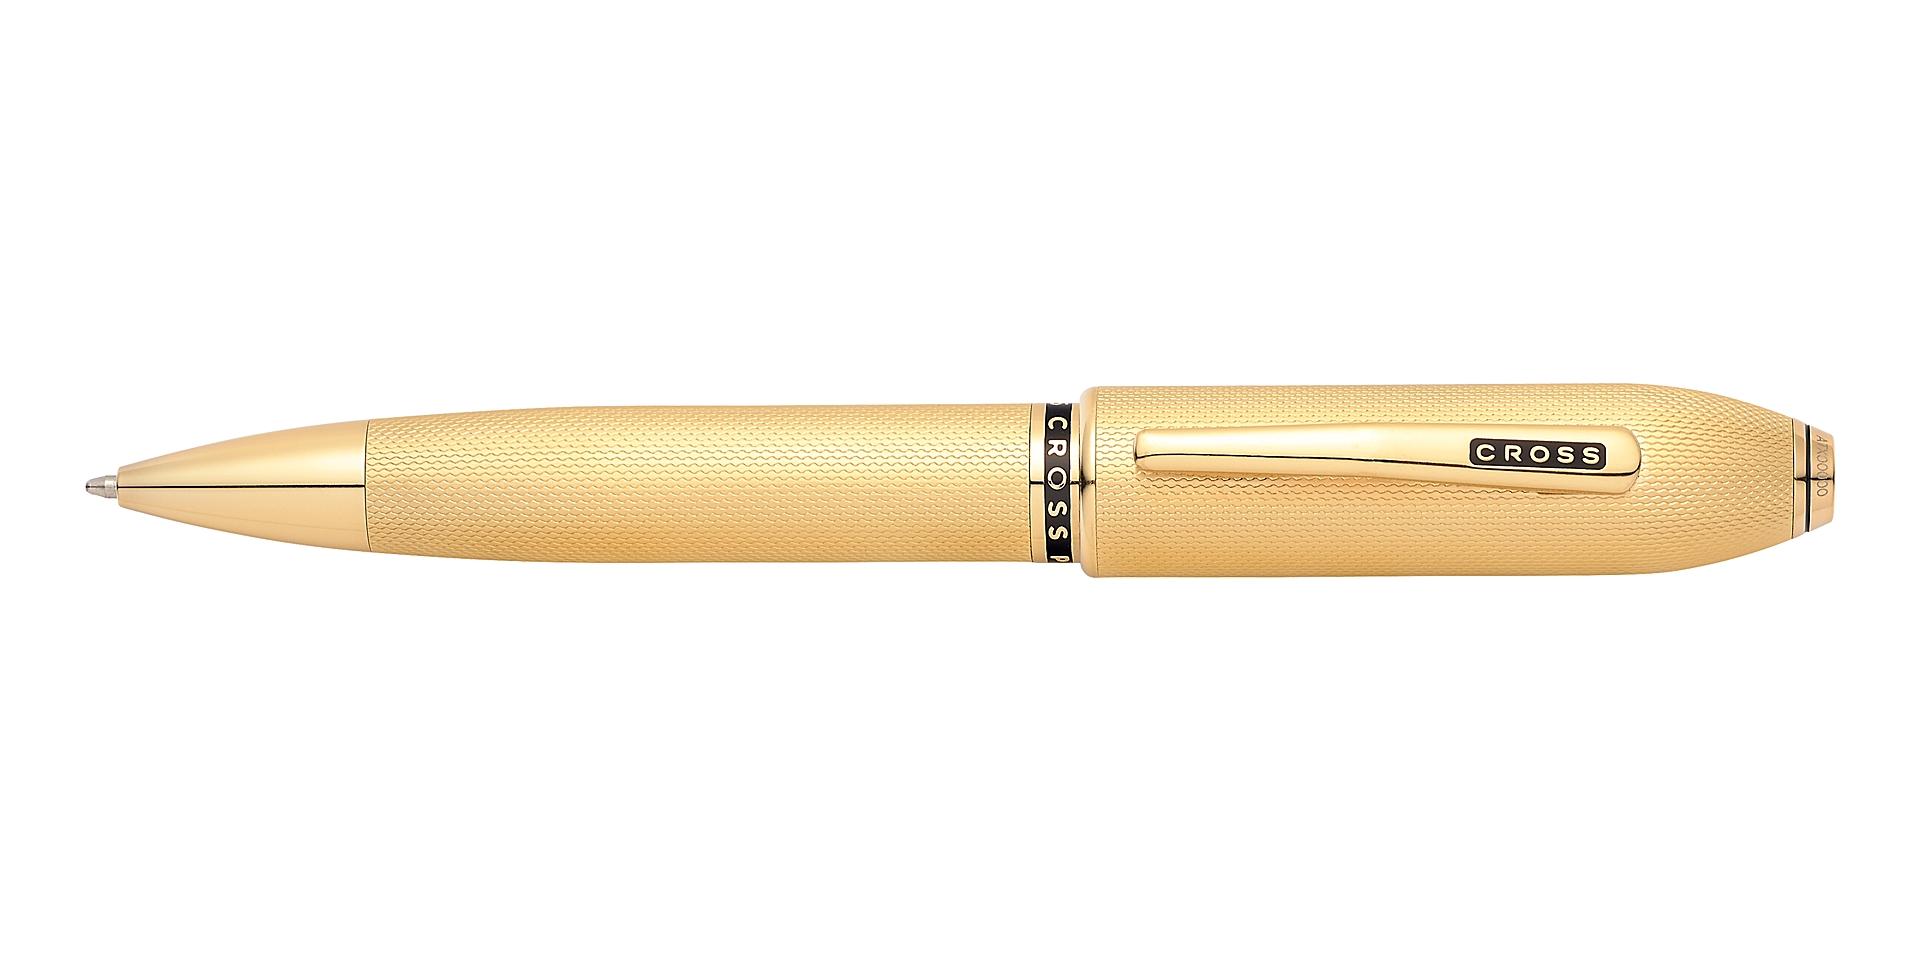 Peerless 125 23 K Heavy Gold Plate Ballpoint Pen